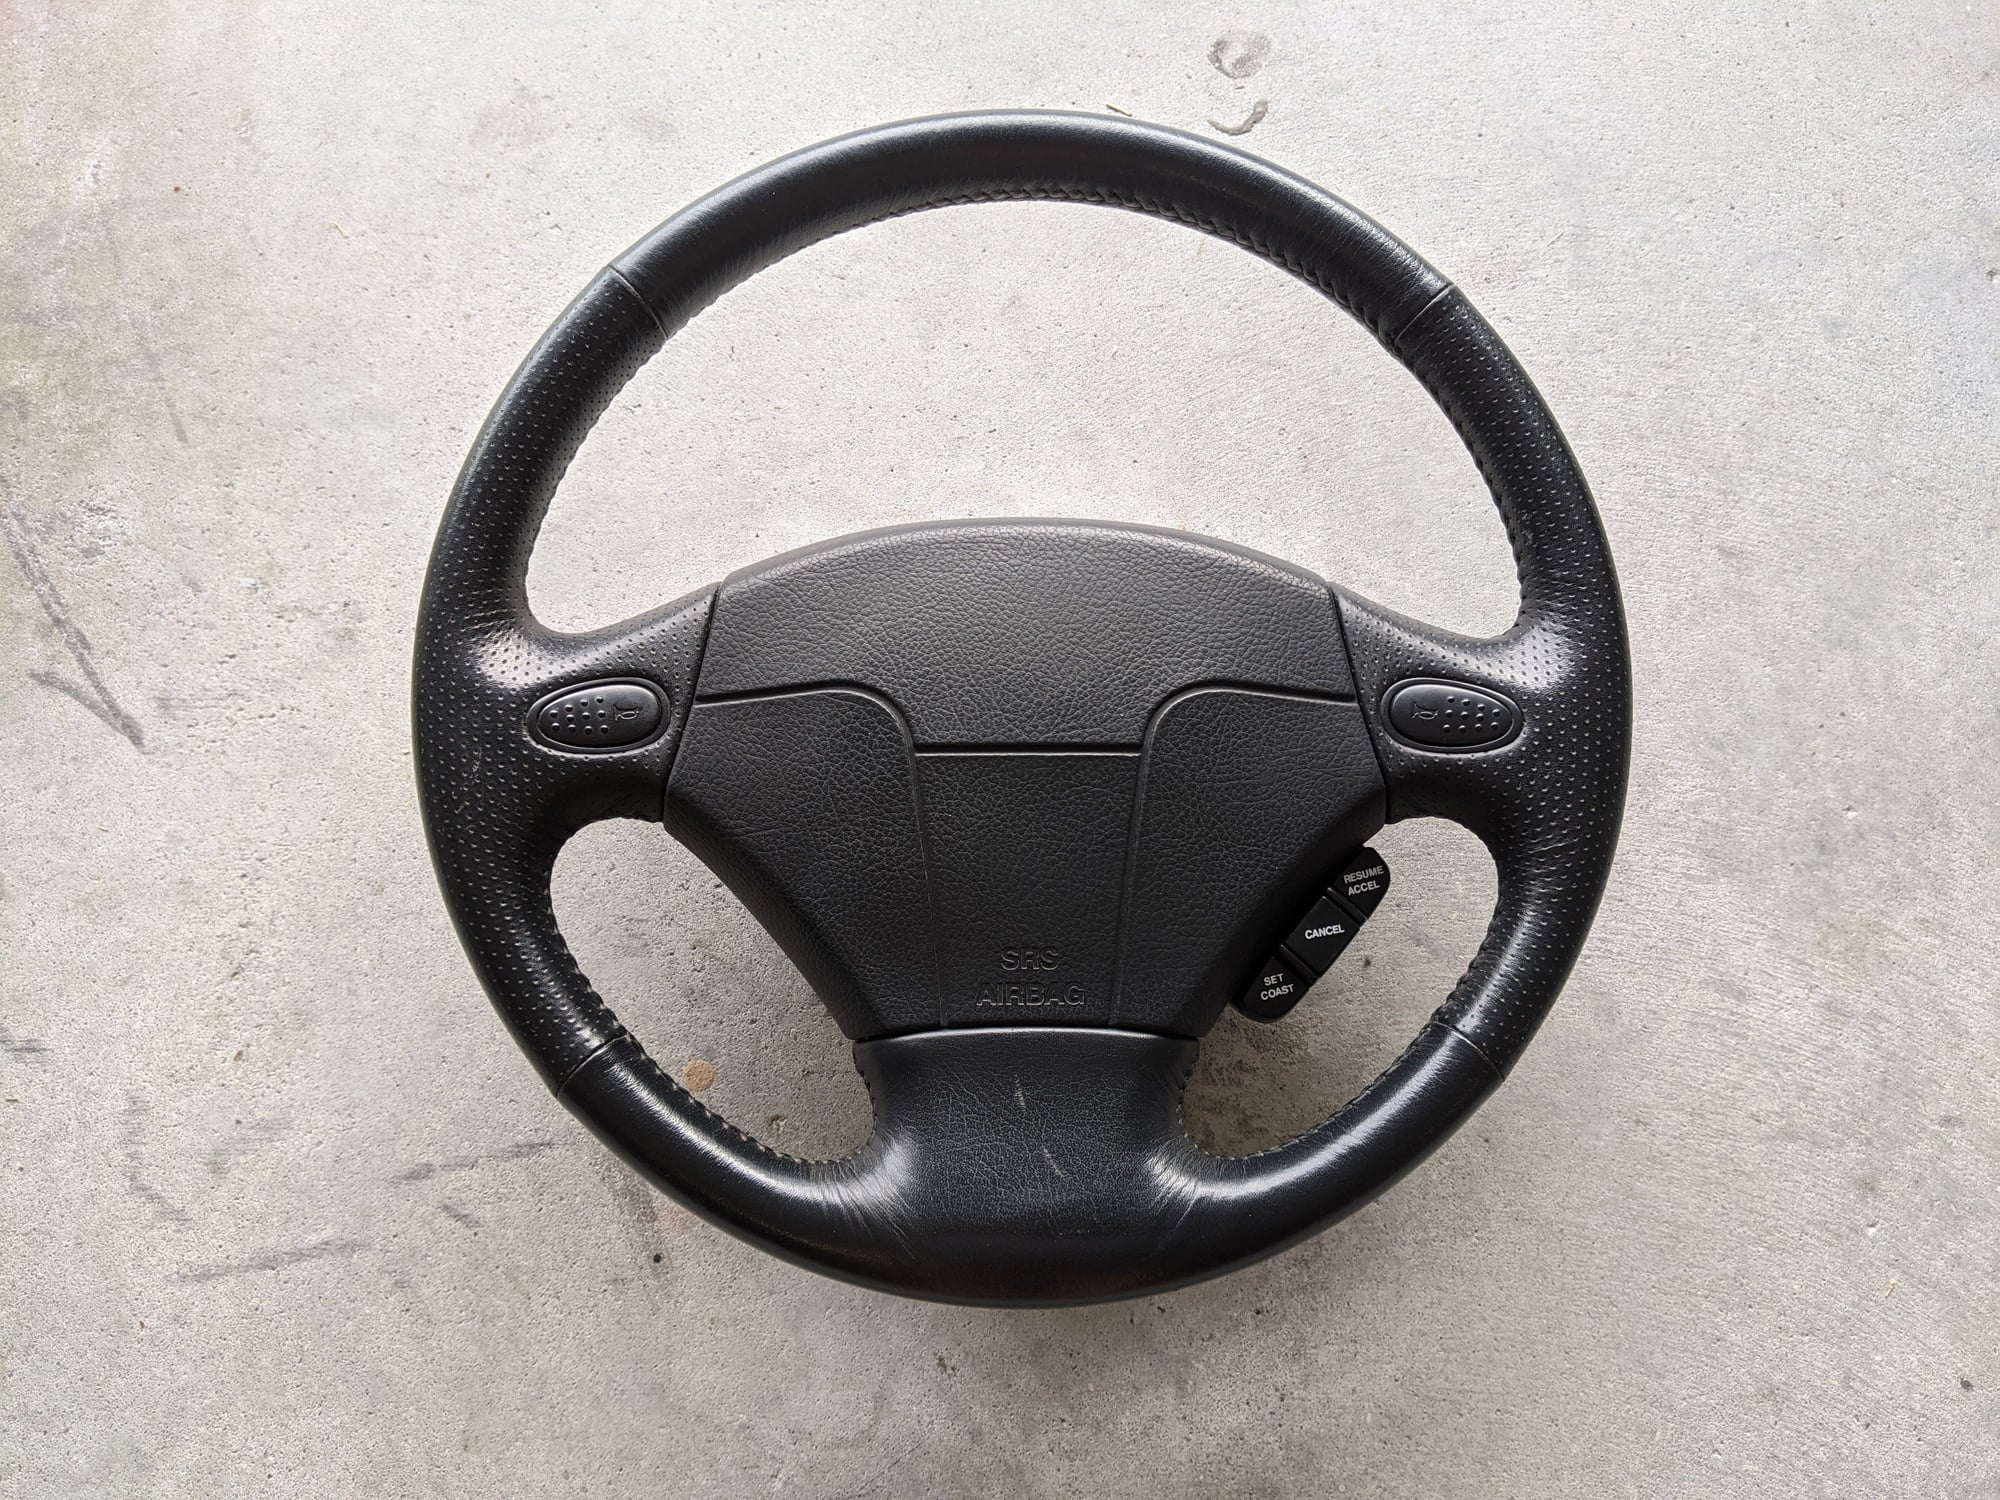 1993 Mazda RX-7 - OEM 1993 Steering Wheel w/ Airbag - Interior/Upholstery - $100 - Melbourne, FL 32940, United States